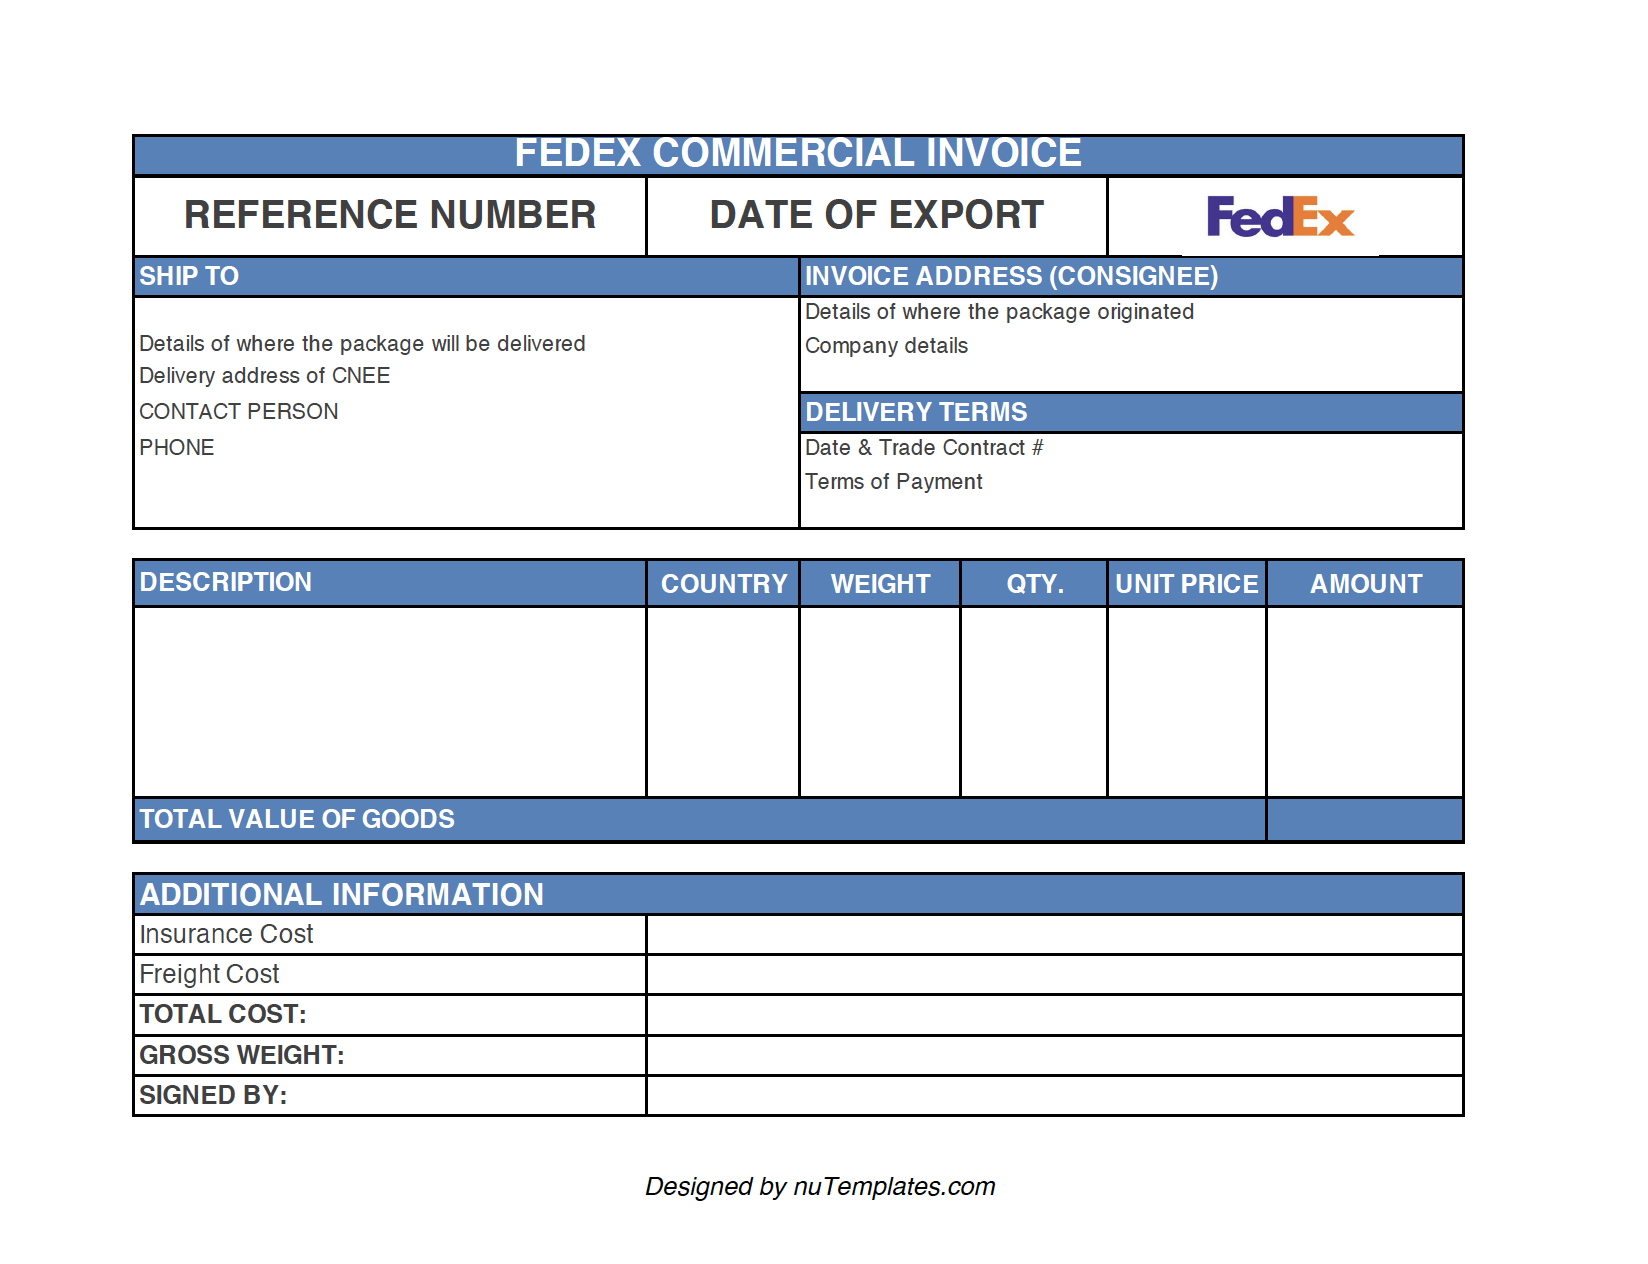 Fedex Commercial Invoice Template Fedex Invoices Nutemplates Riset